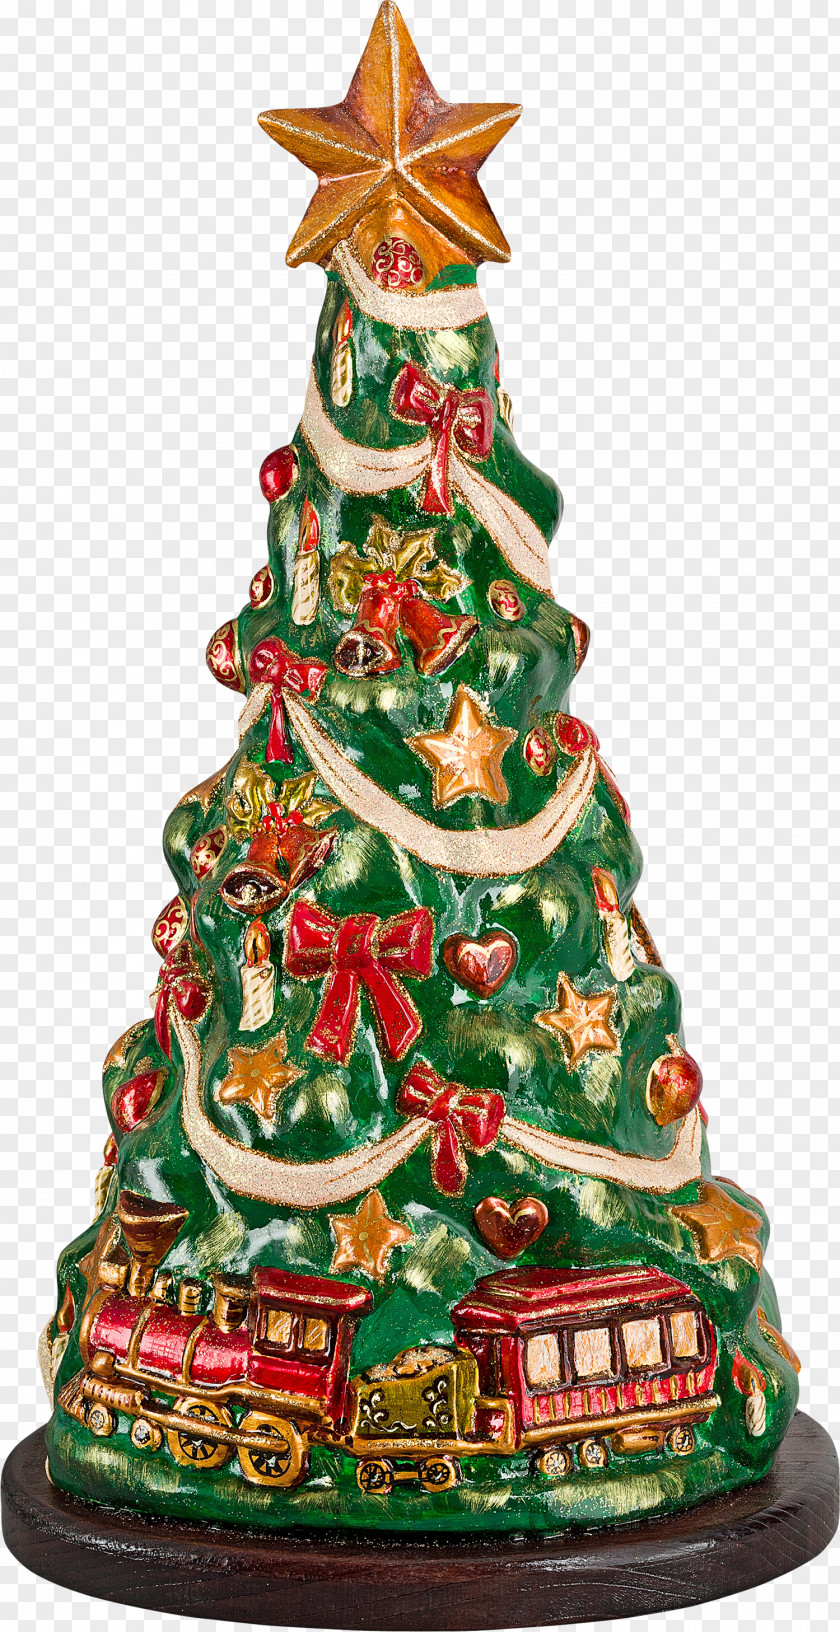 Christmas Dress Up Tree Ornament Santa Claus PNG